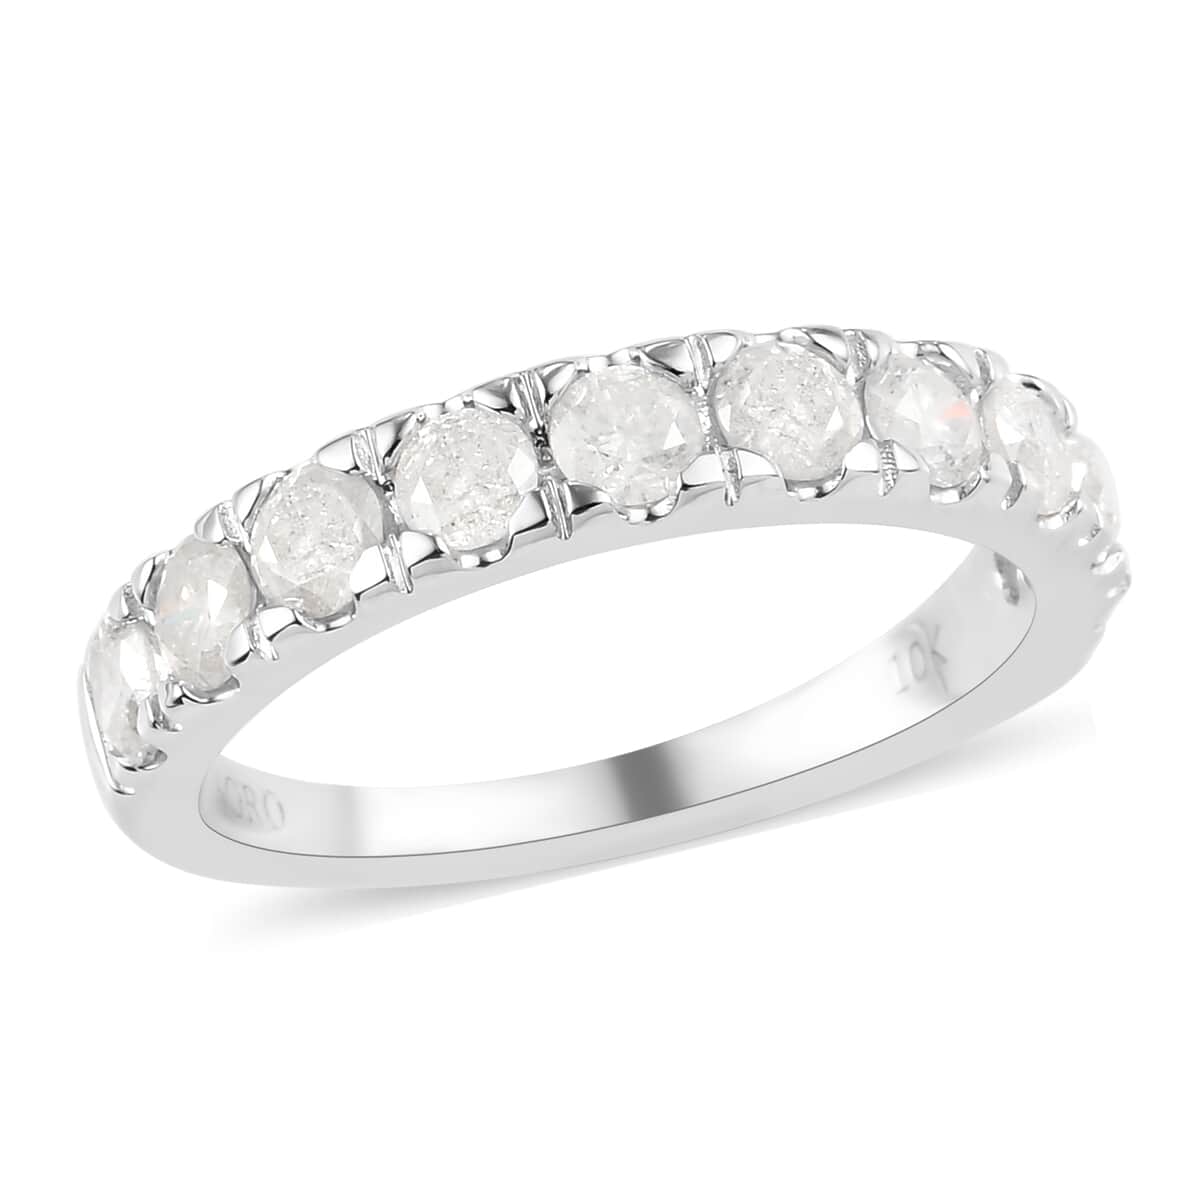 LUXORO 10K White Gold G-H I2 Diamond Band Ring (Size 6.0) 2.50 Grams 1.00 ctw image number 0